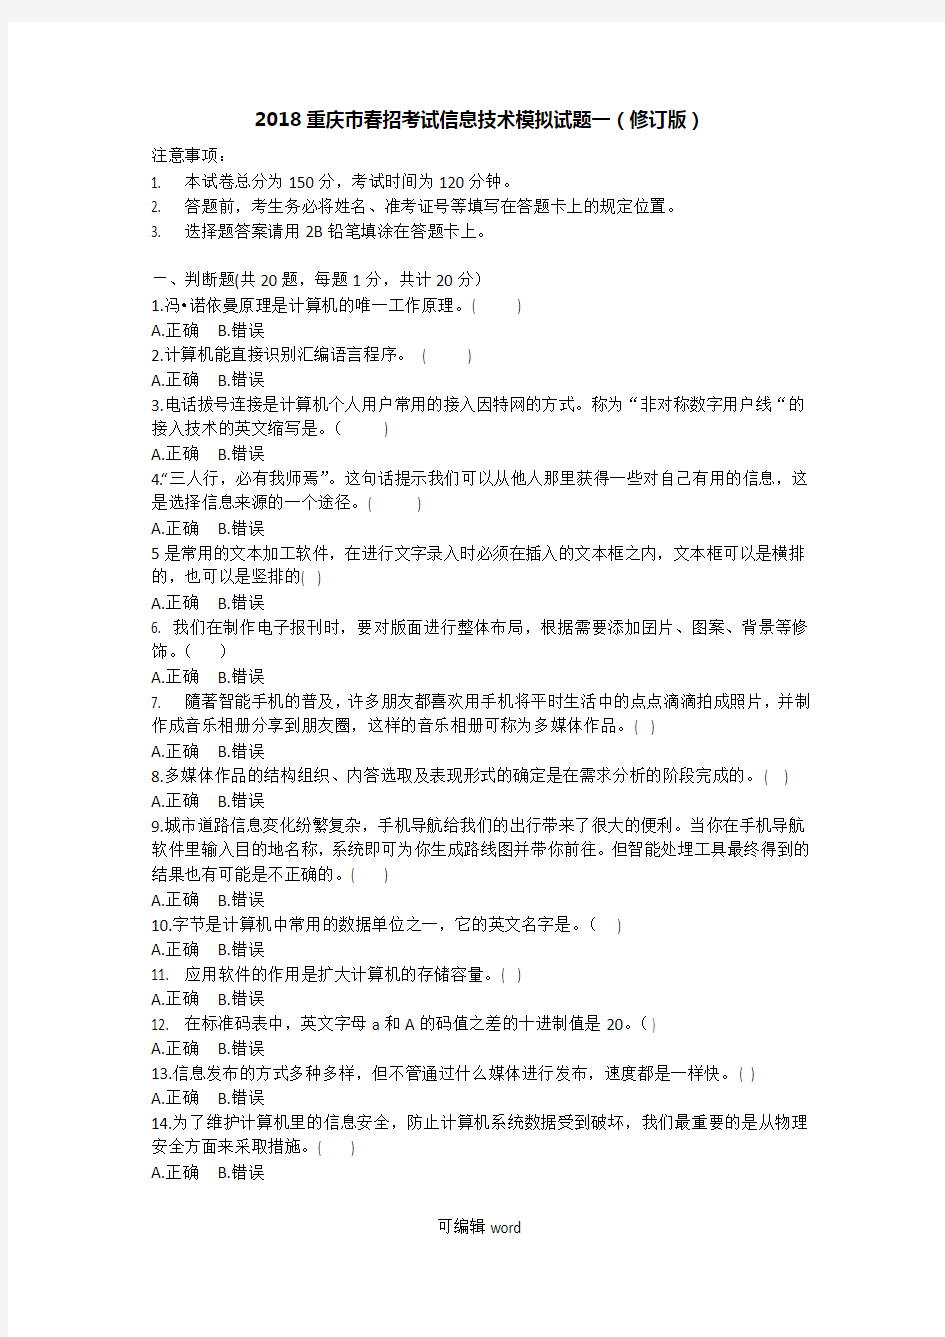 201X重庆市春招考试信息技术模拟试题一(修订版)